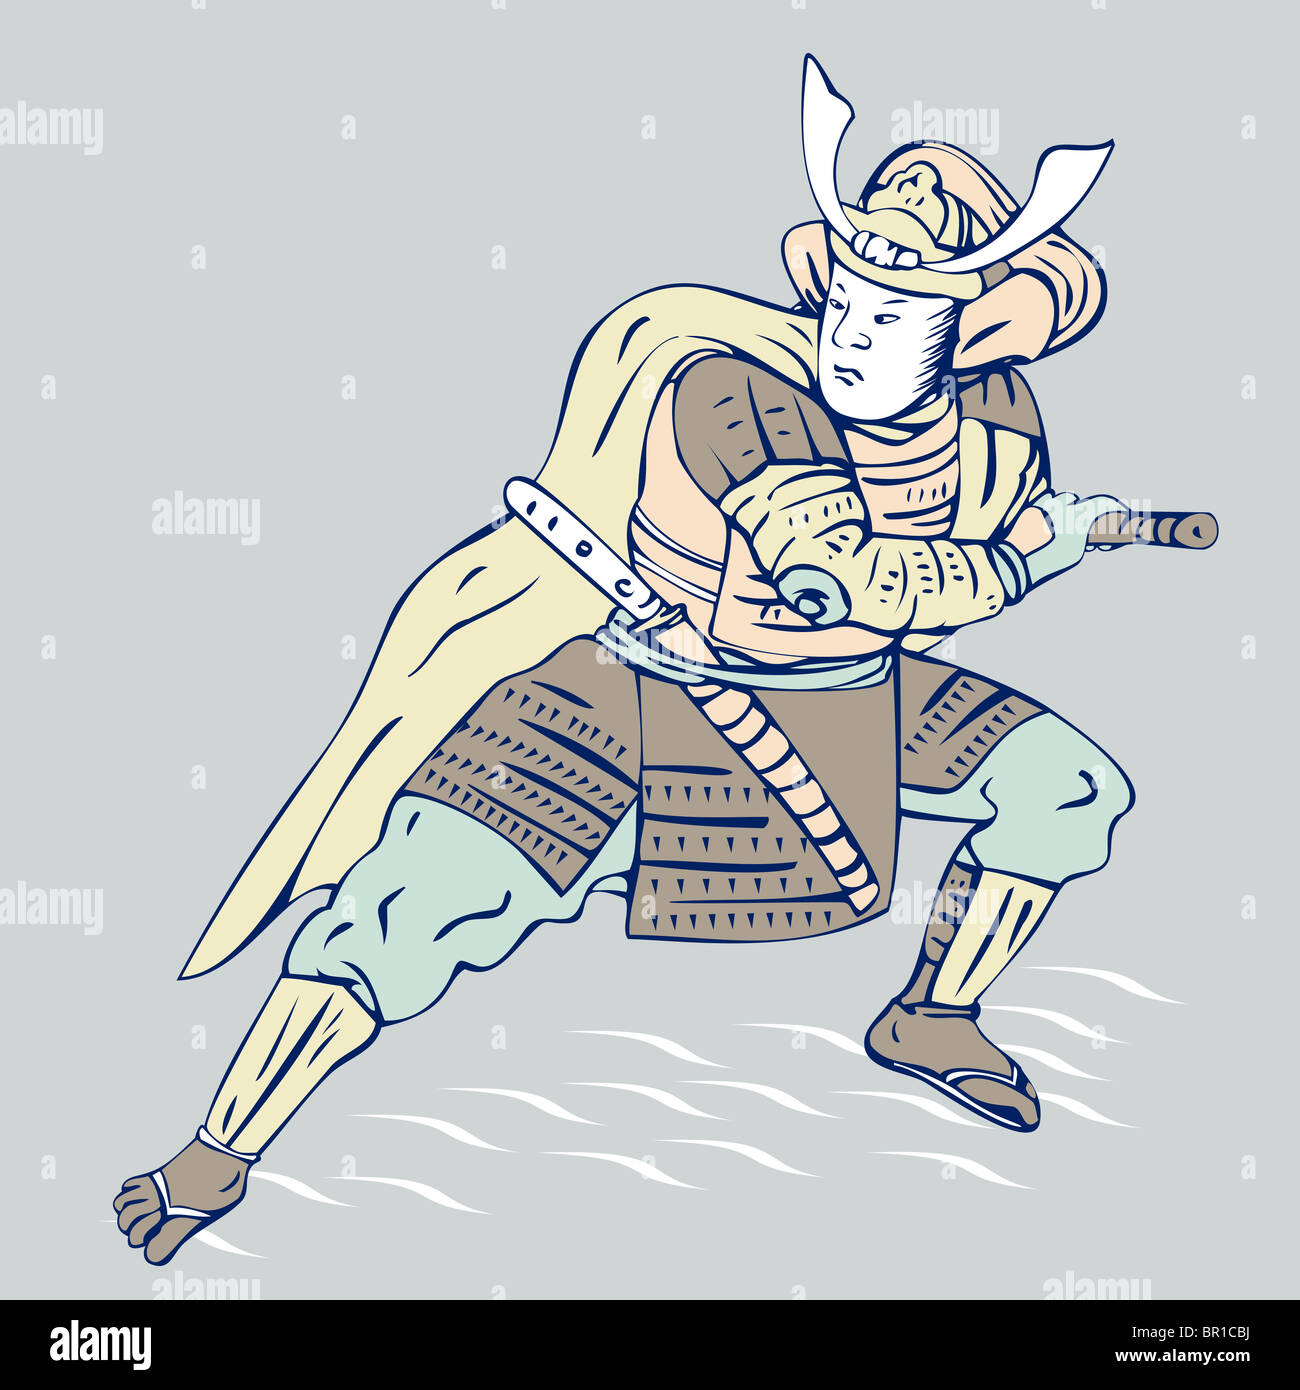 illustration of a Japanese samurai warrior in fighting stance with samurai katana sword Stock Photo